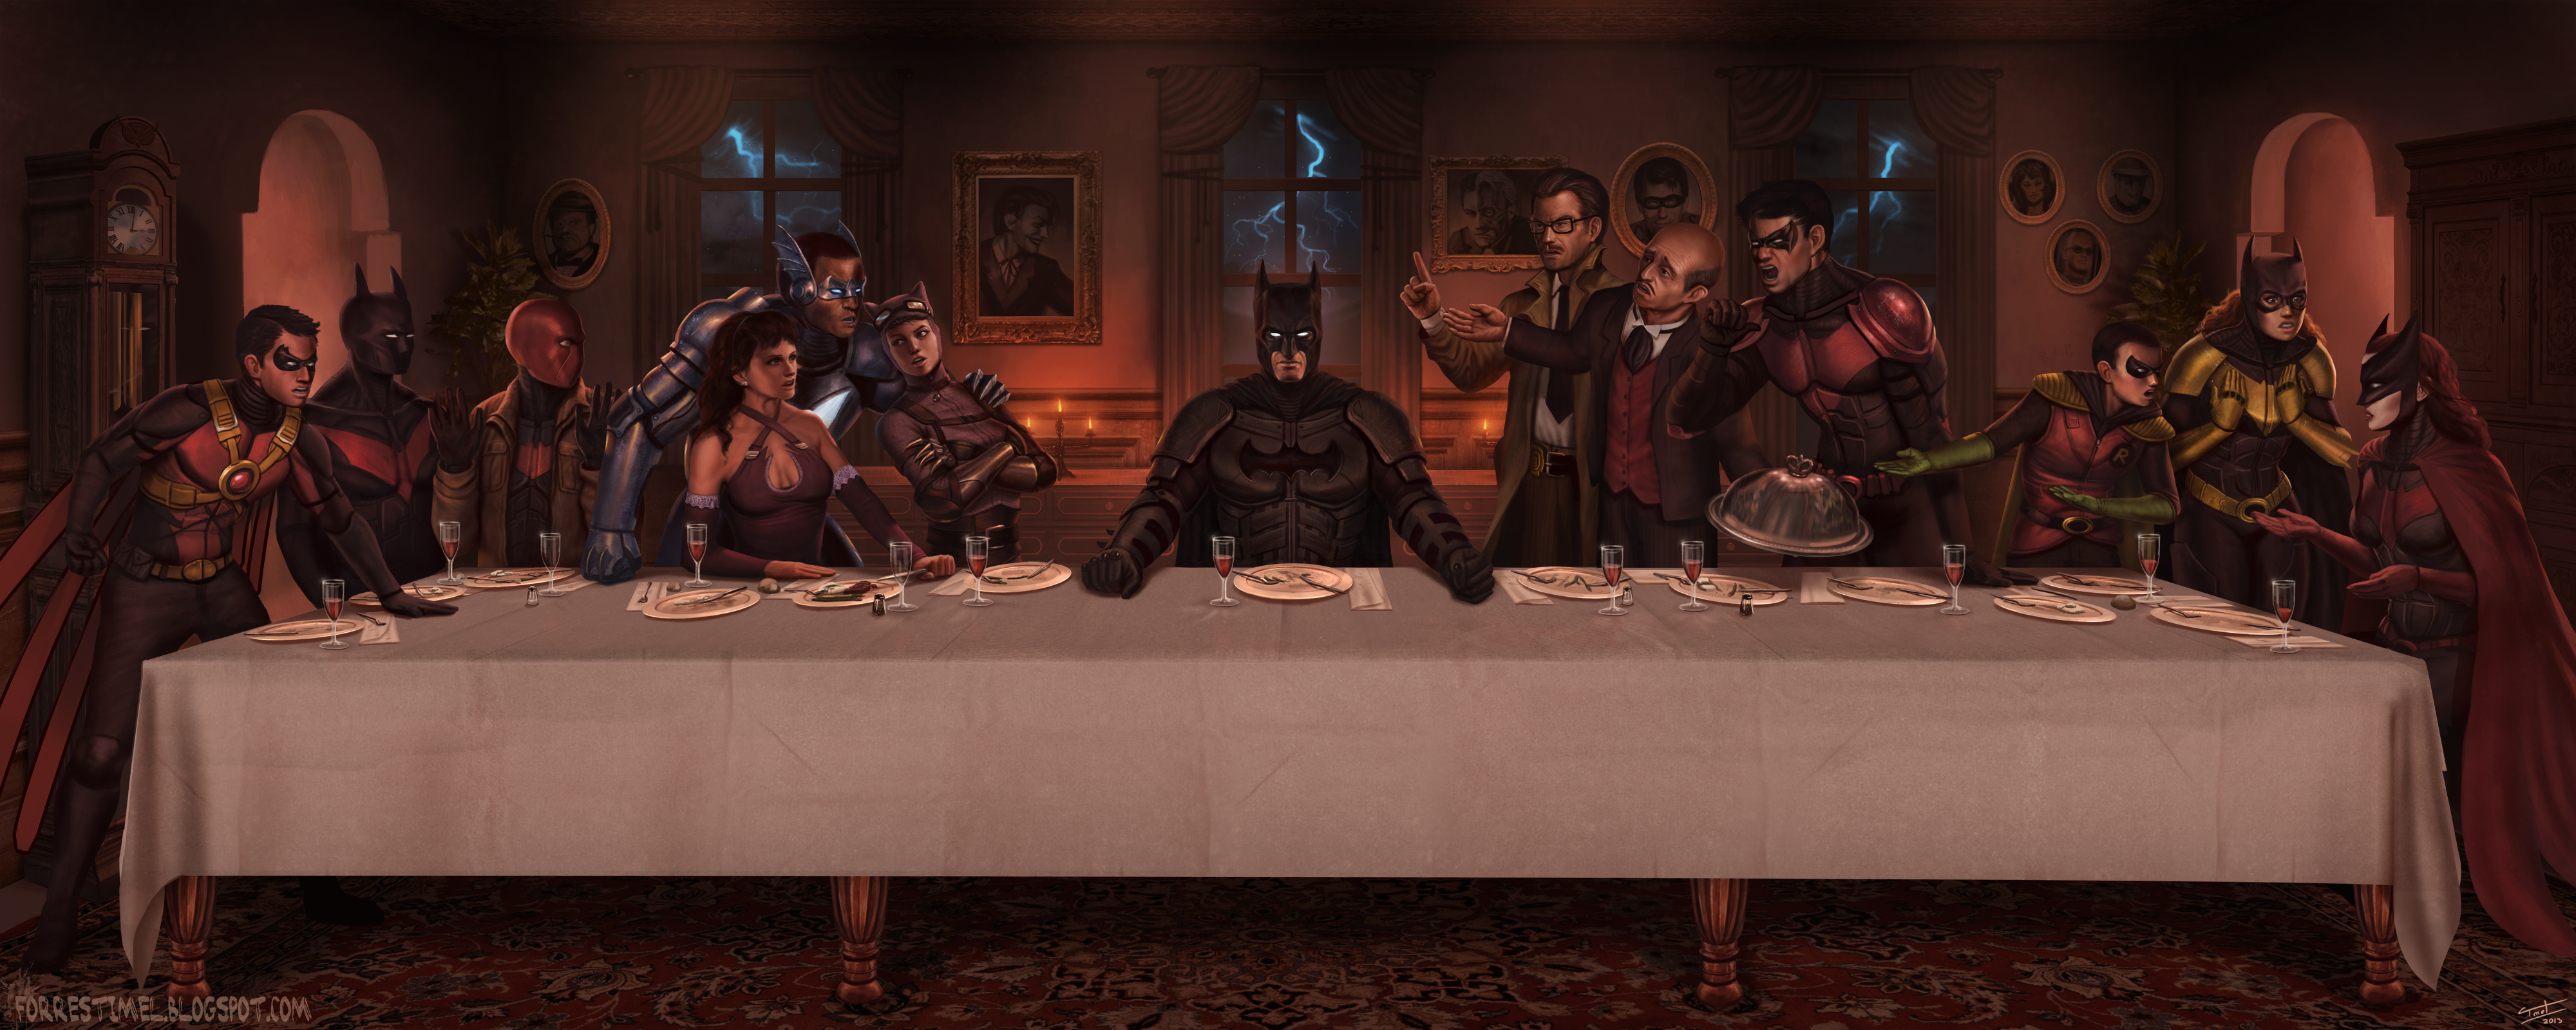 DC Comics Robin Character Batman Catwoman Nightwing Red Hood The Last Supper Artwork 4000x1600